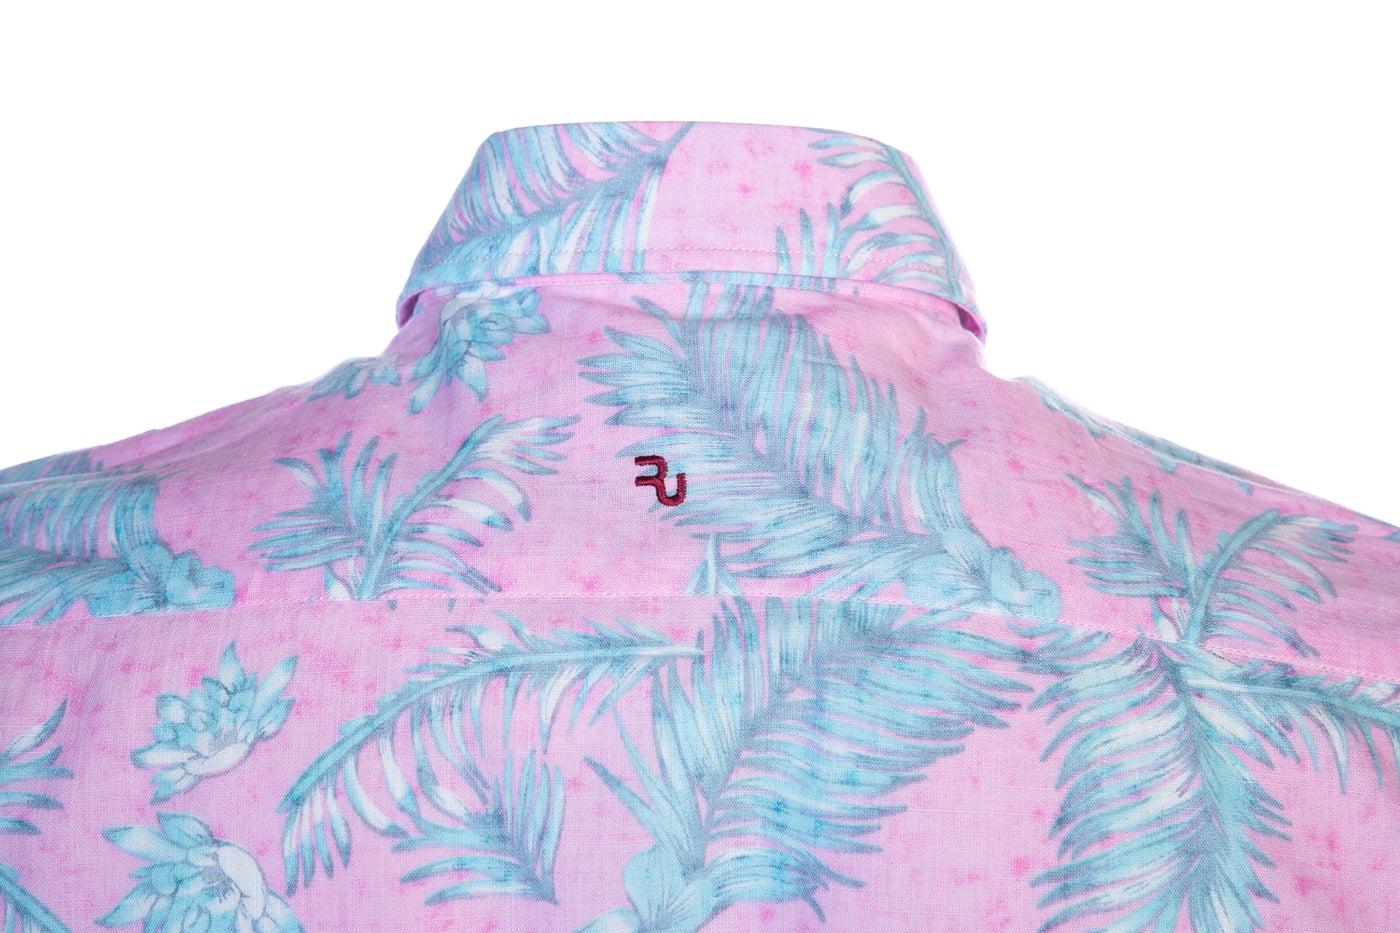 Remus Uomo Fern Print Short Sleeve Shirt in Pink